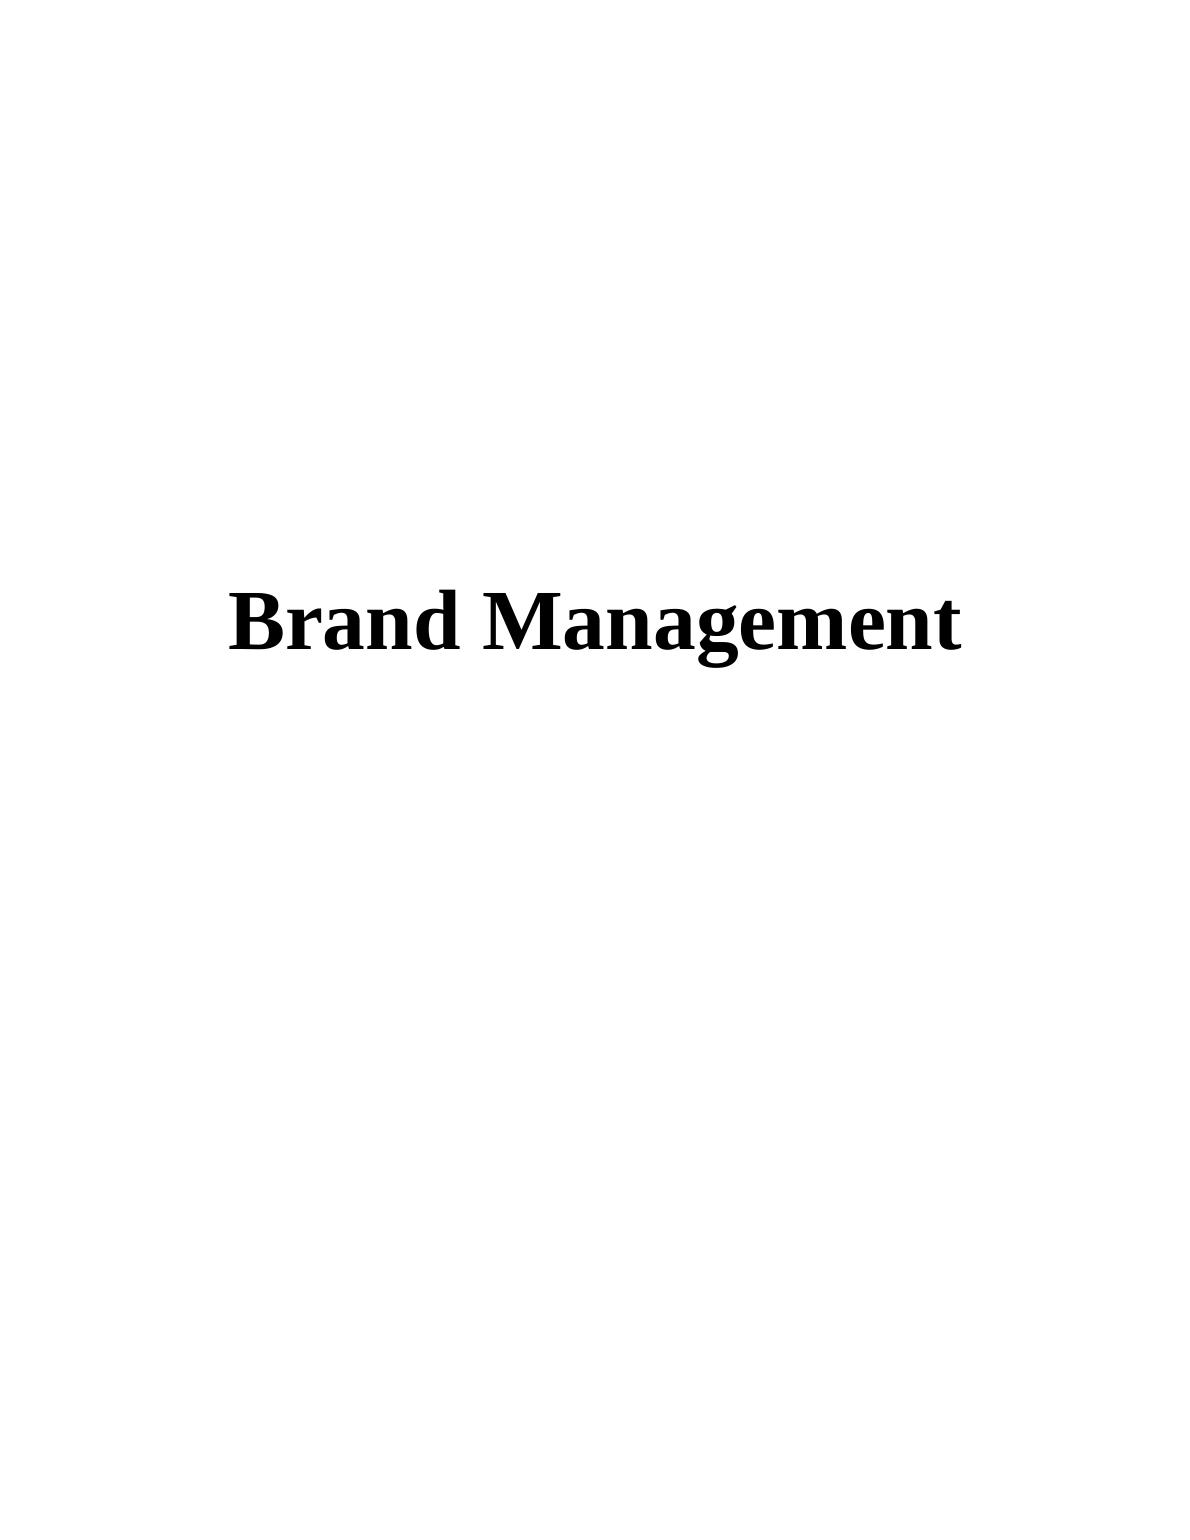 Brand Management Assignment : Coca Cola_1